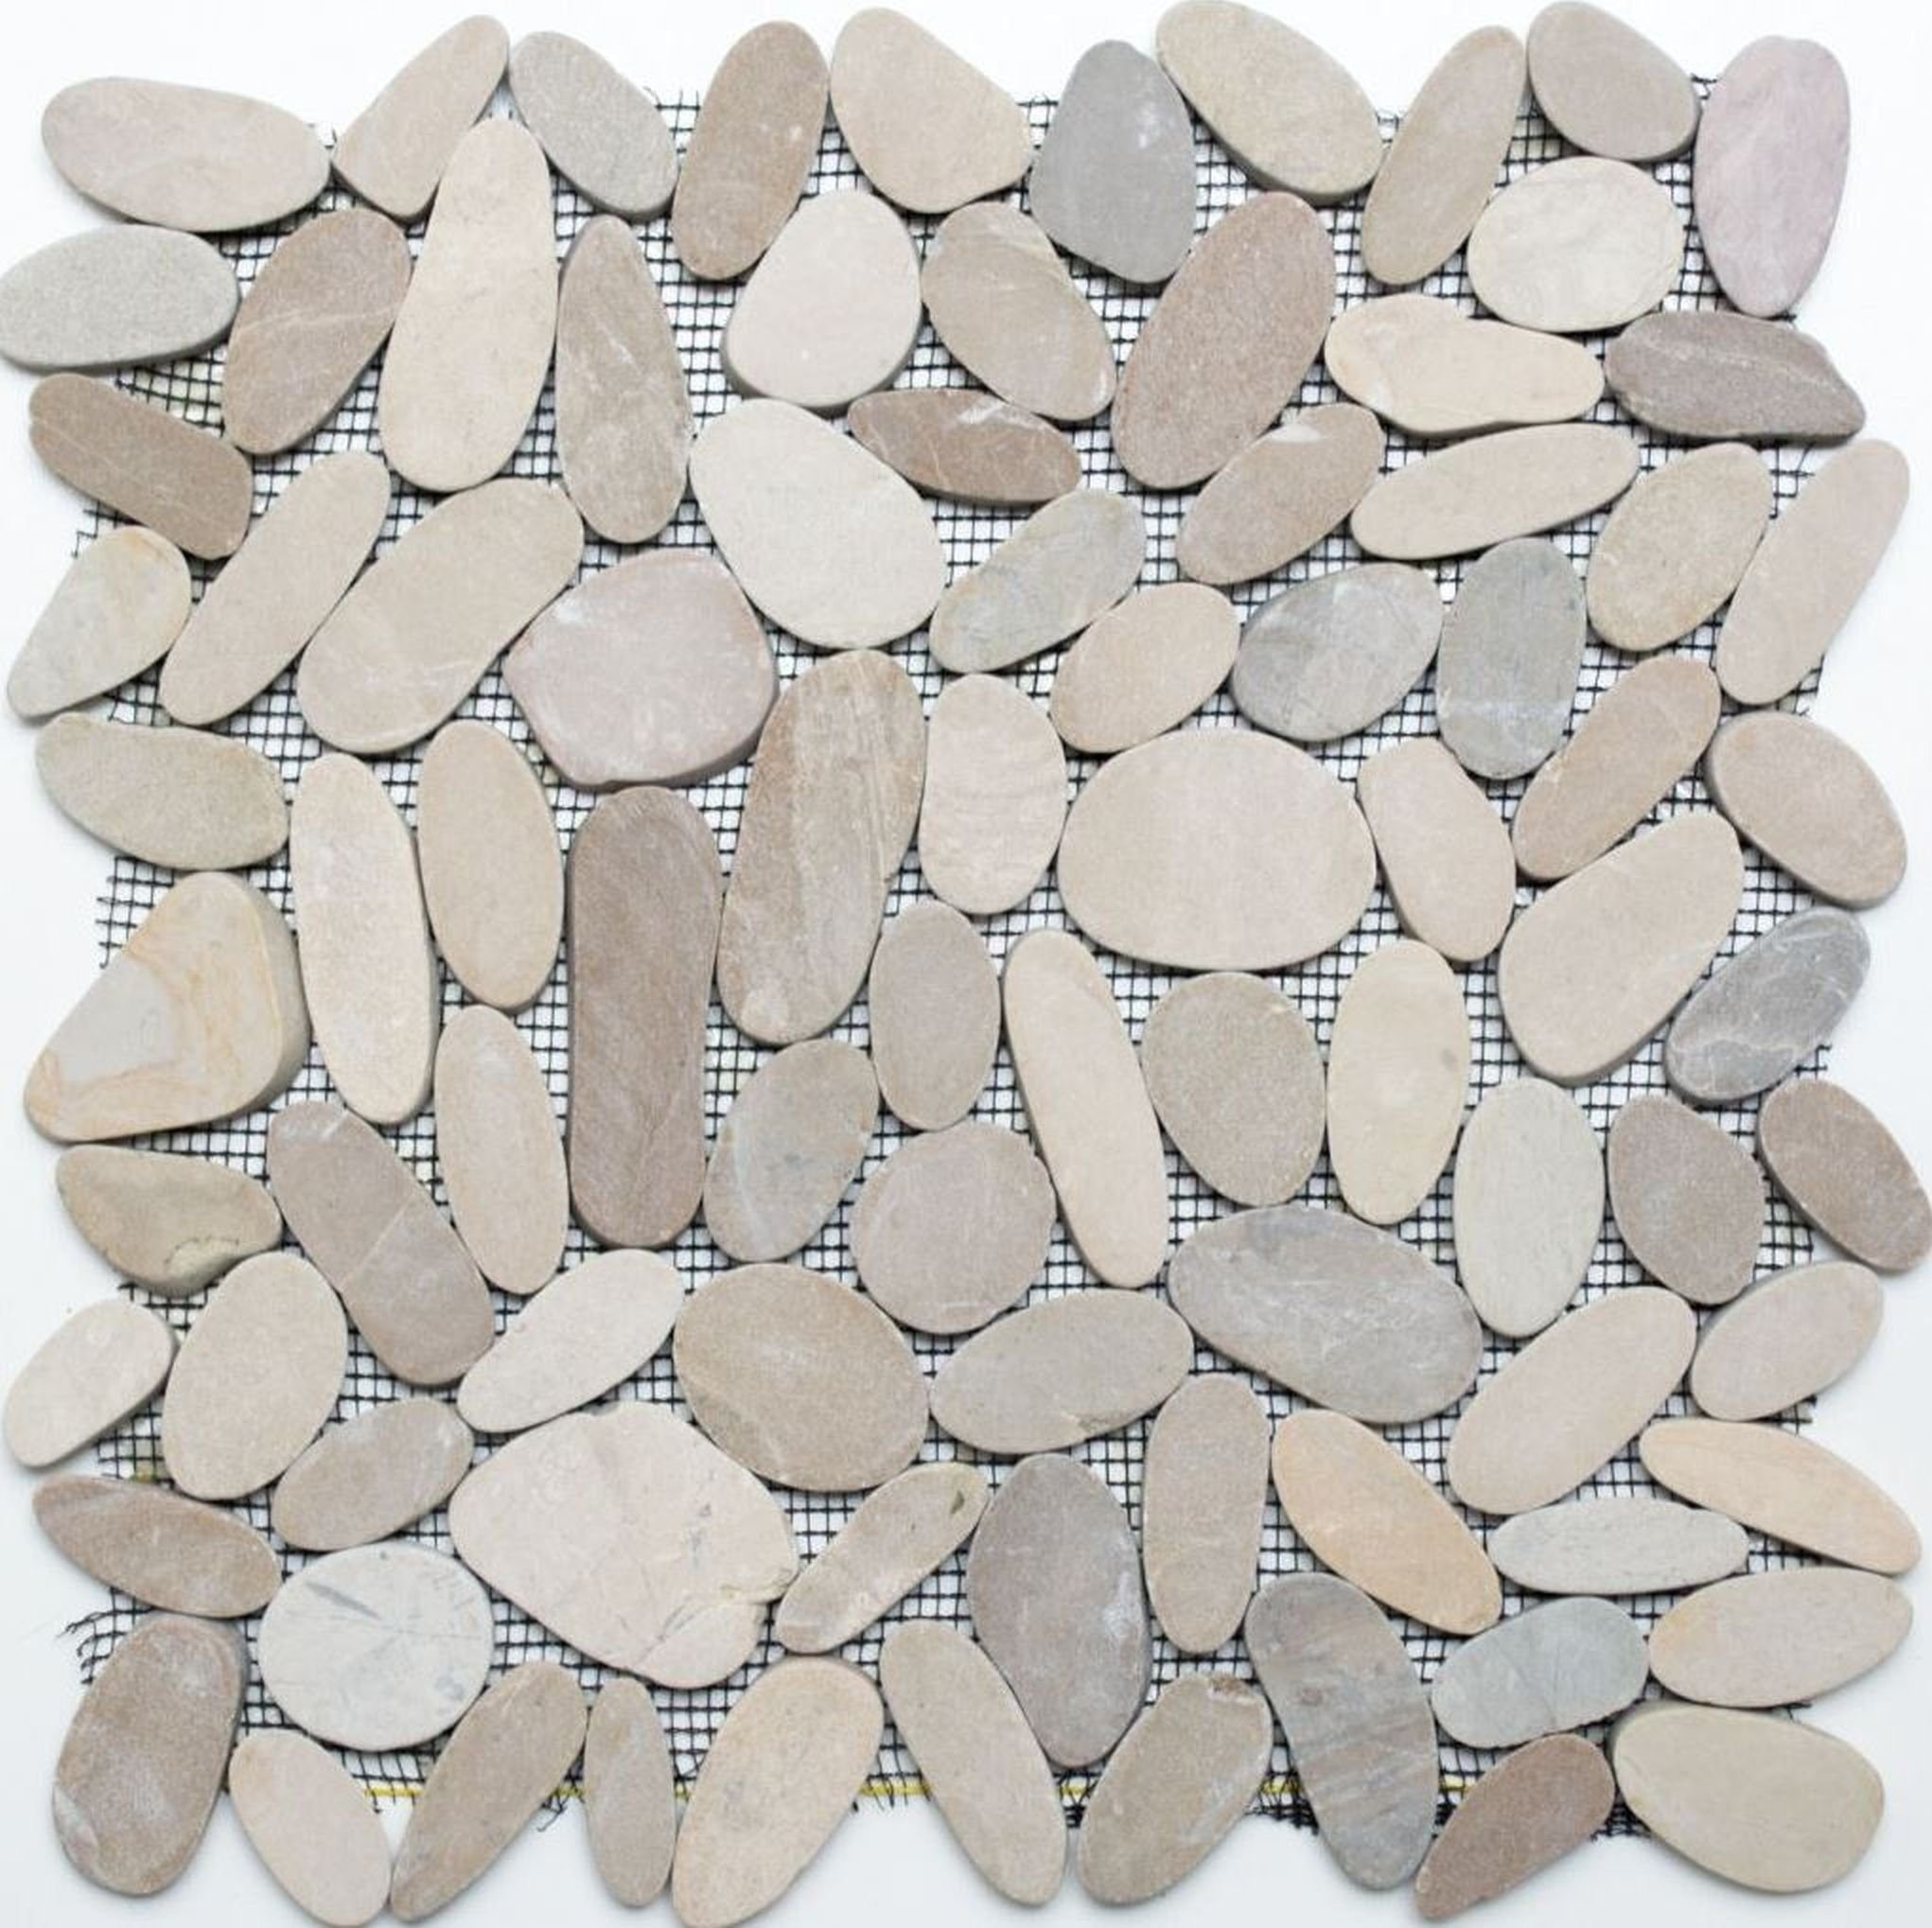 Mosani Mosaikfliesen Oval hellbeige 10 matt Flusskiesel Matten / Natursteinteppich